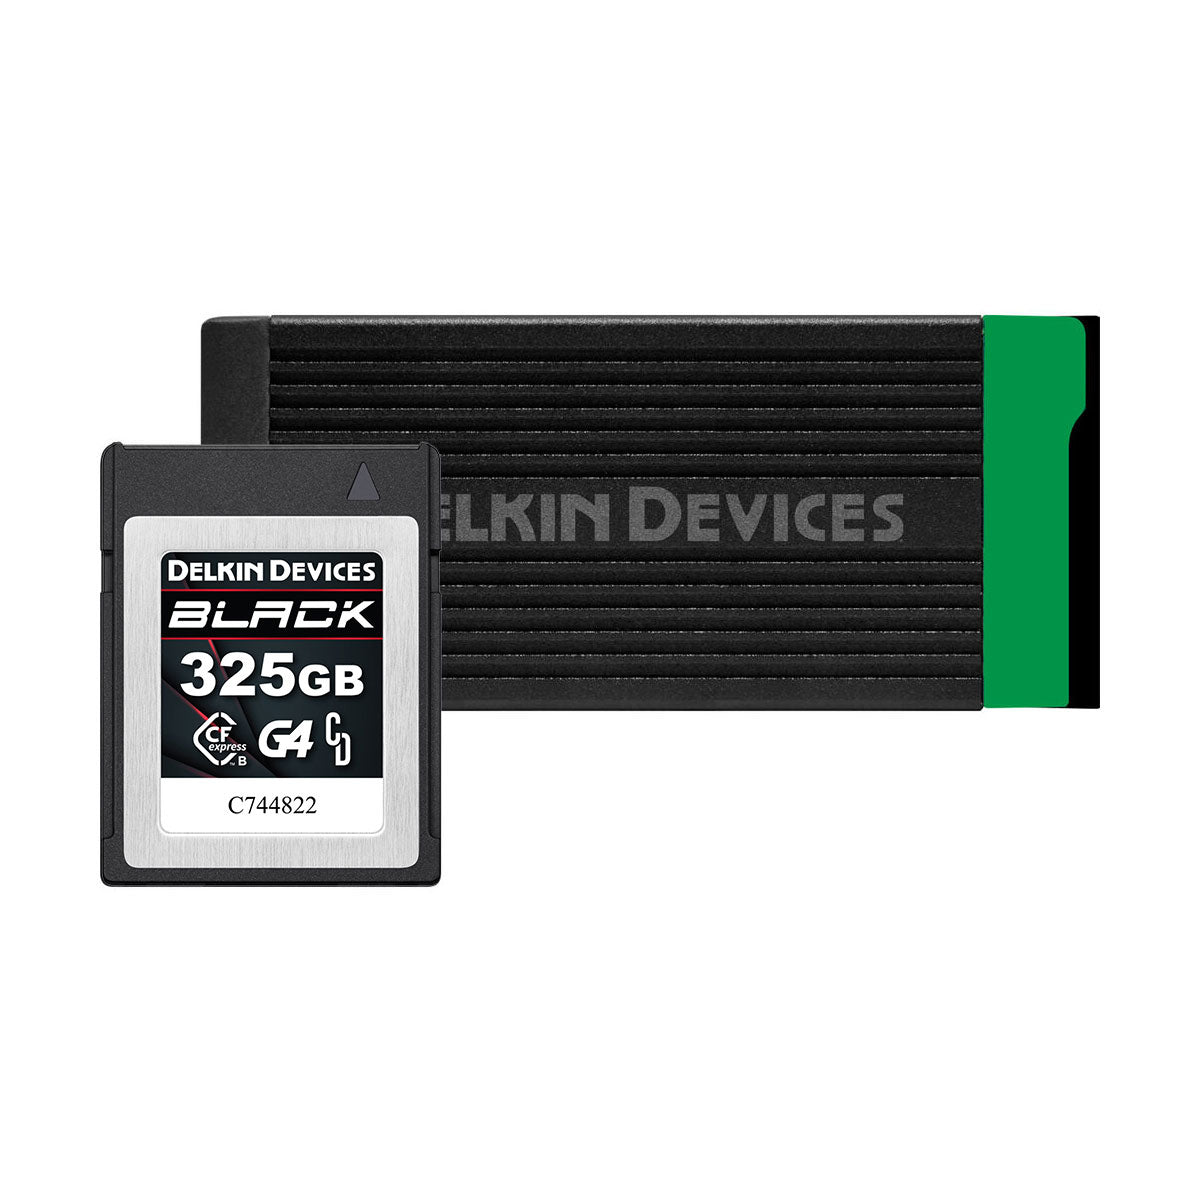 Delkin BLACK 325GB G4 CFexpress Type B Memory Card with USB 3.2 CFexpress Type B and UHS-II SD Memory Card Reader